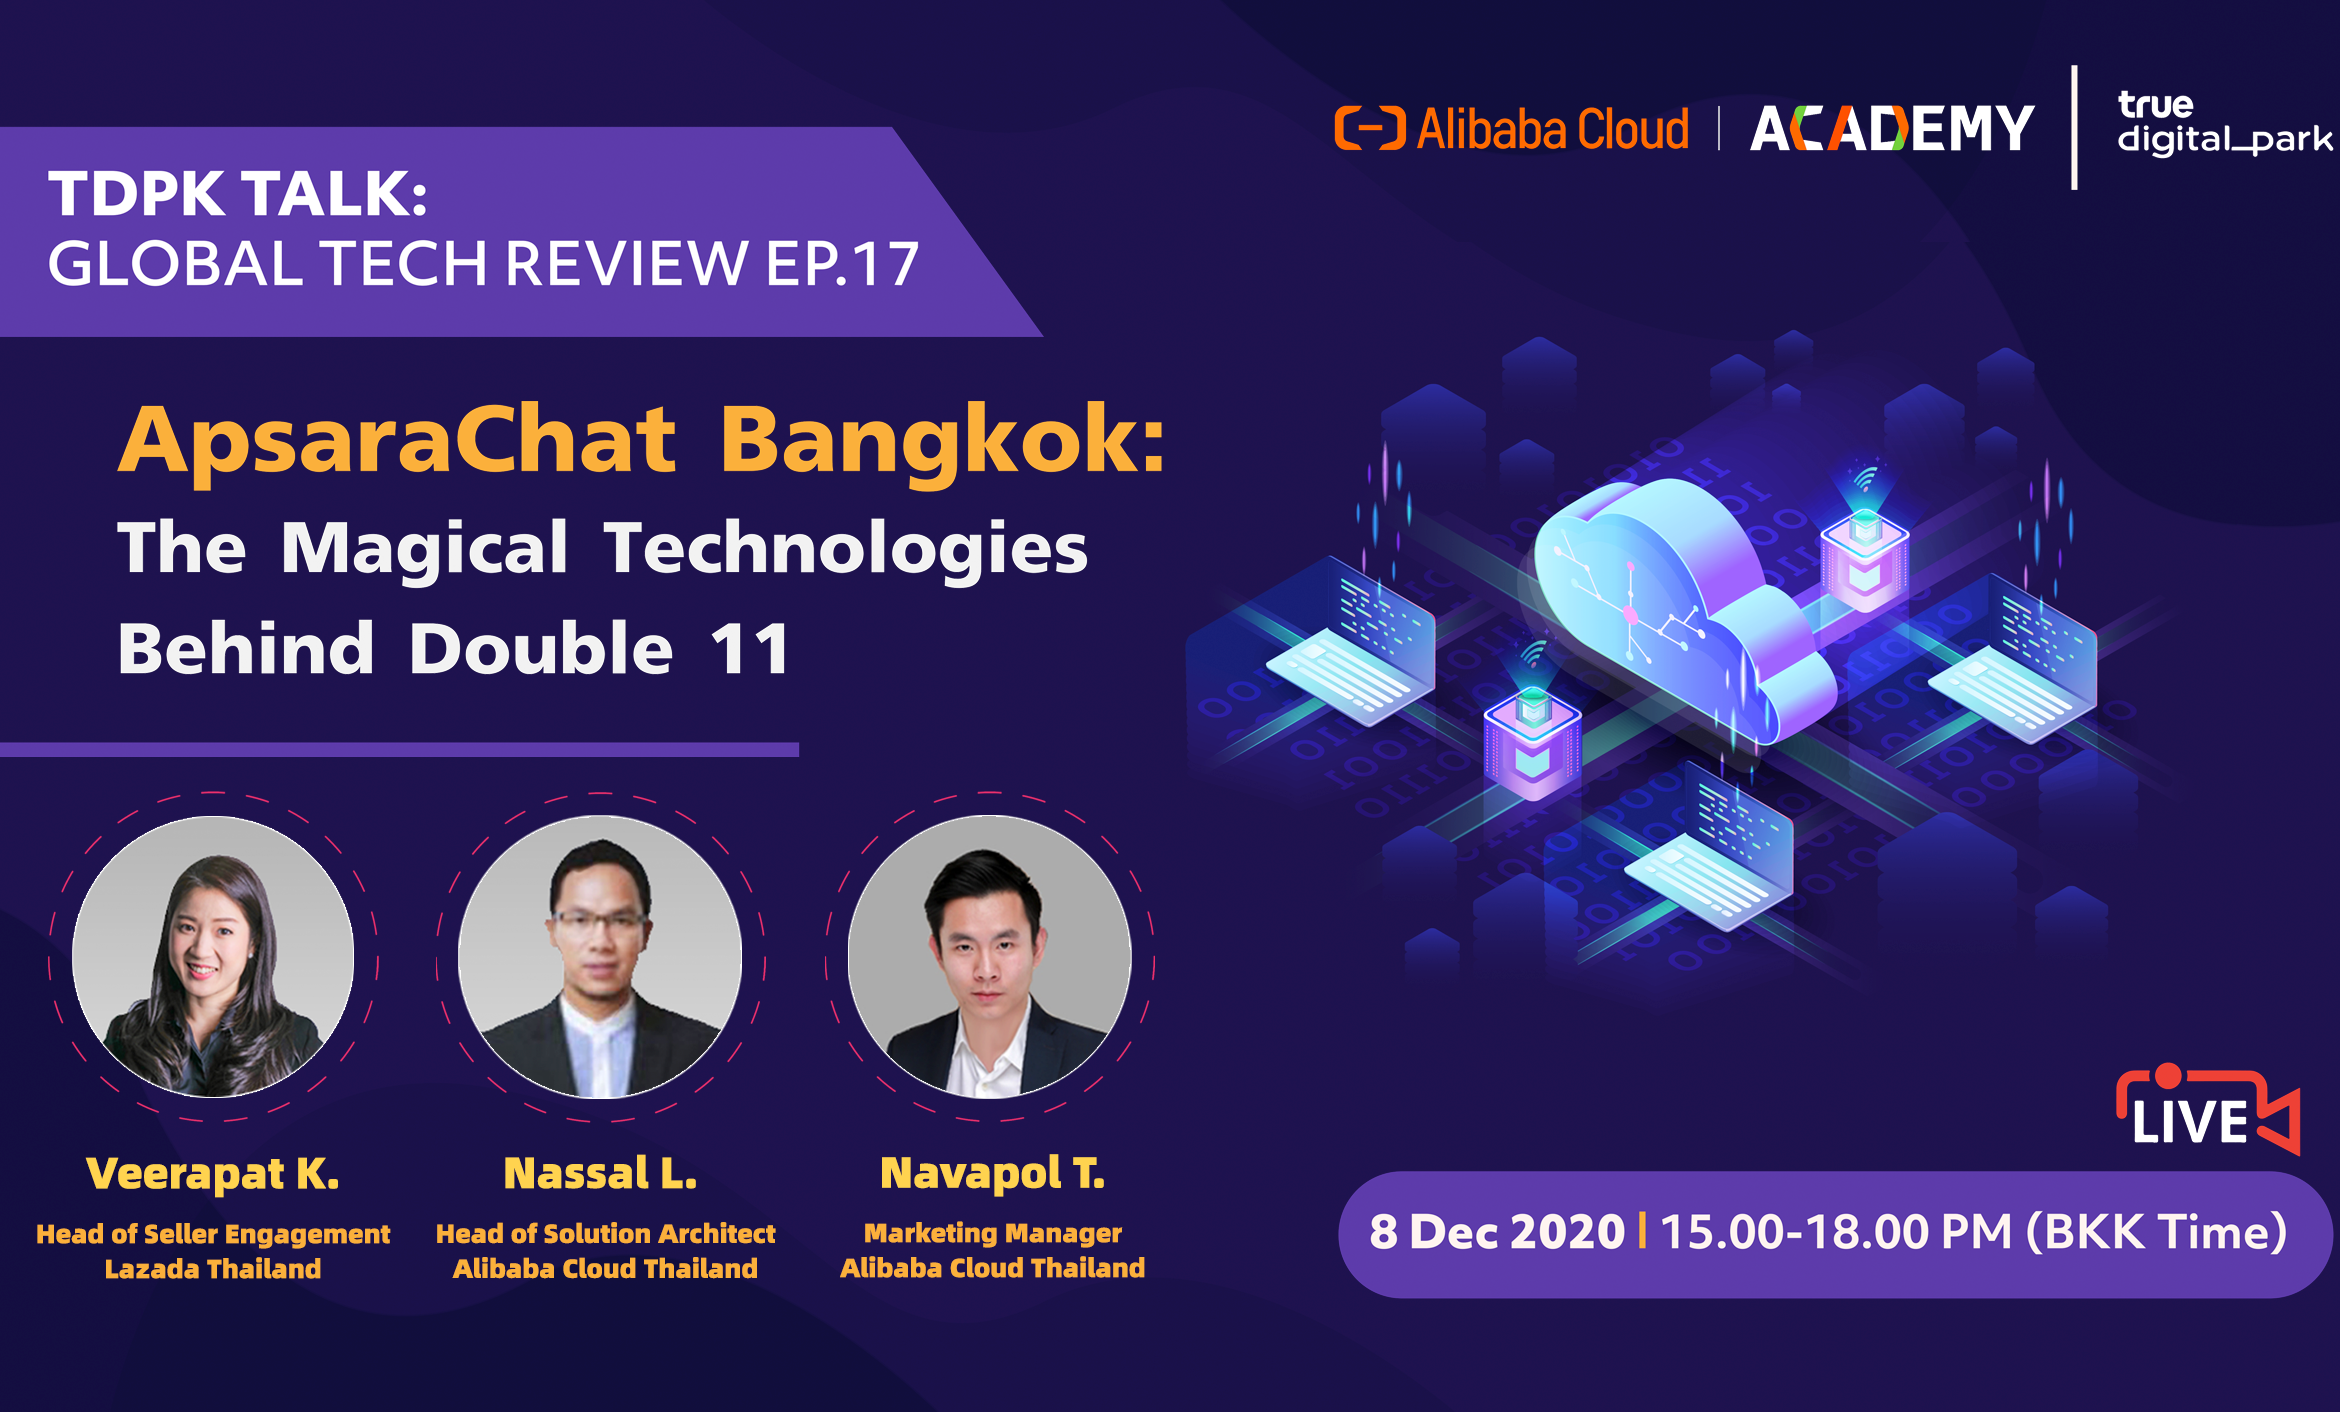 ApsaraChat Bangkok - The Magical Technologies Behind Double 11